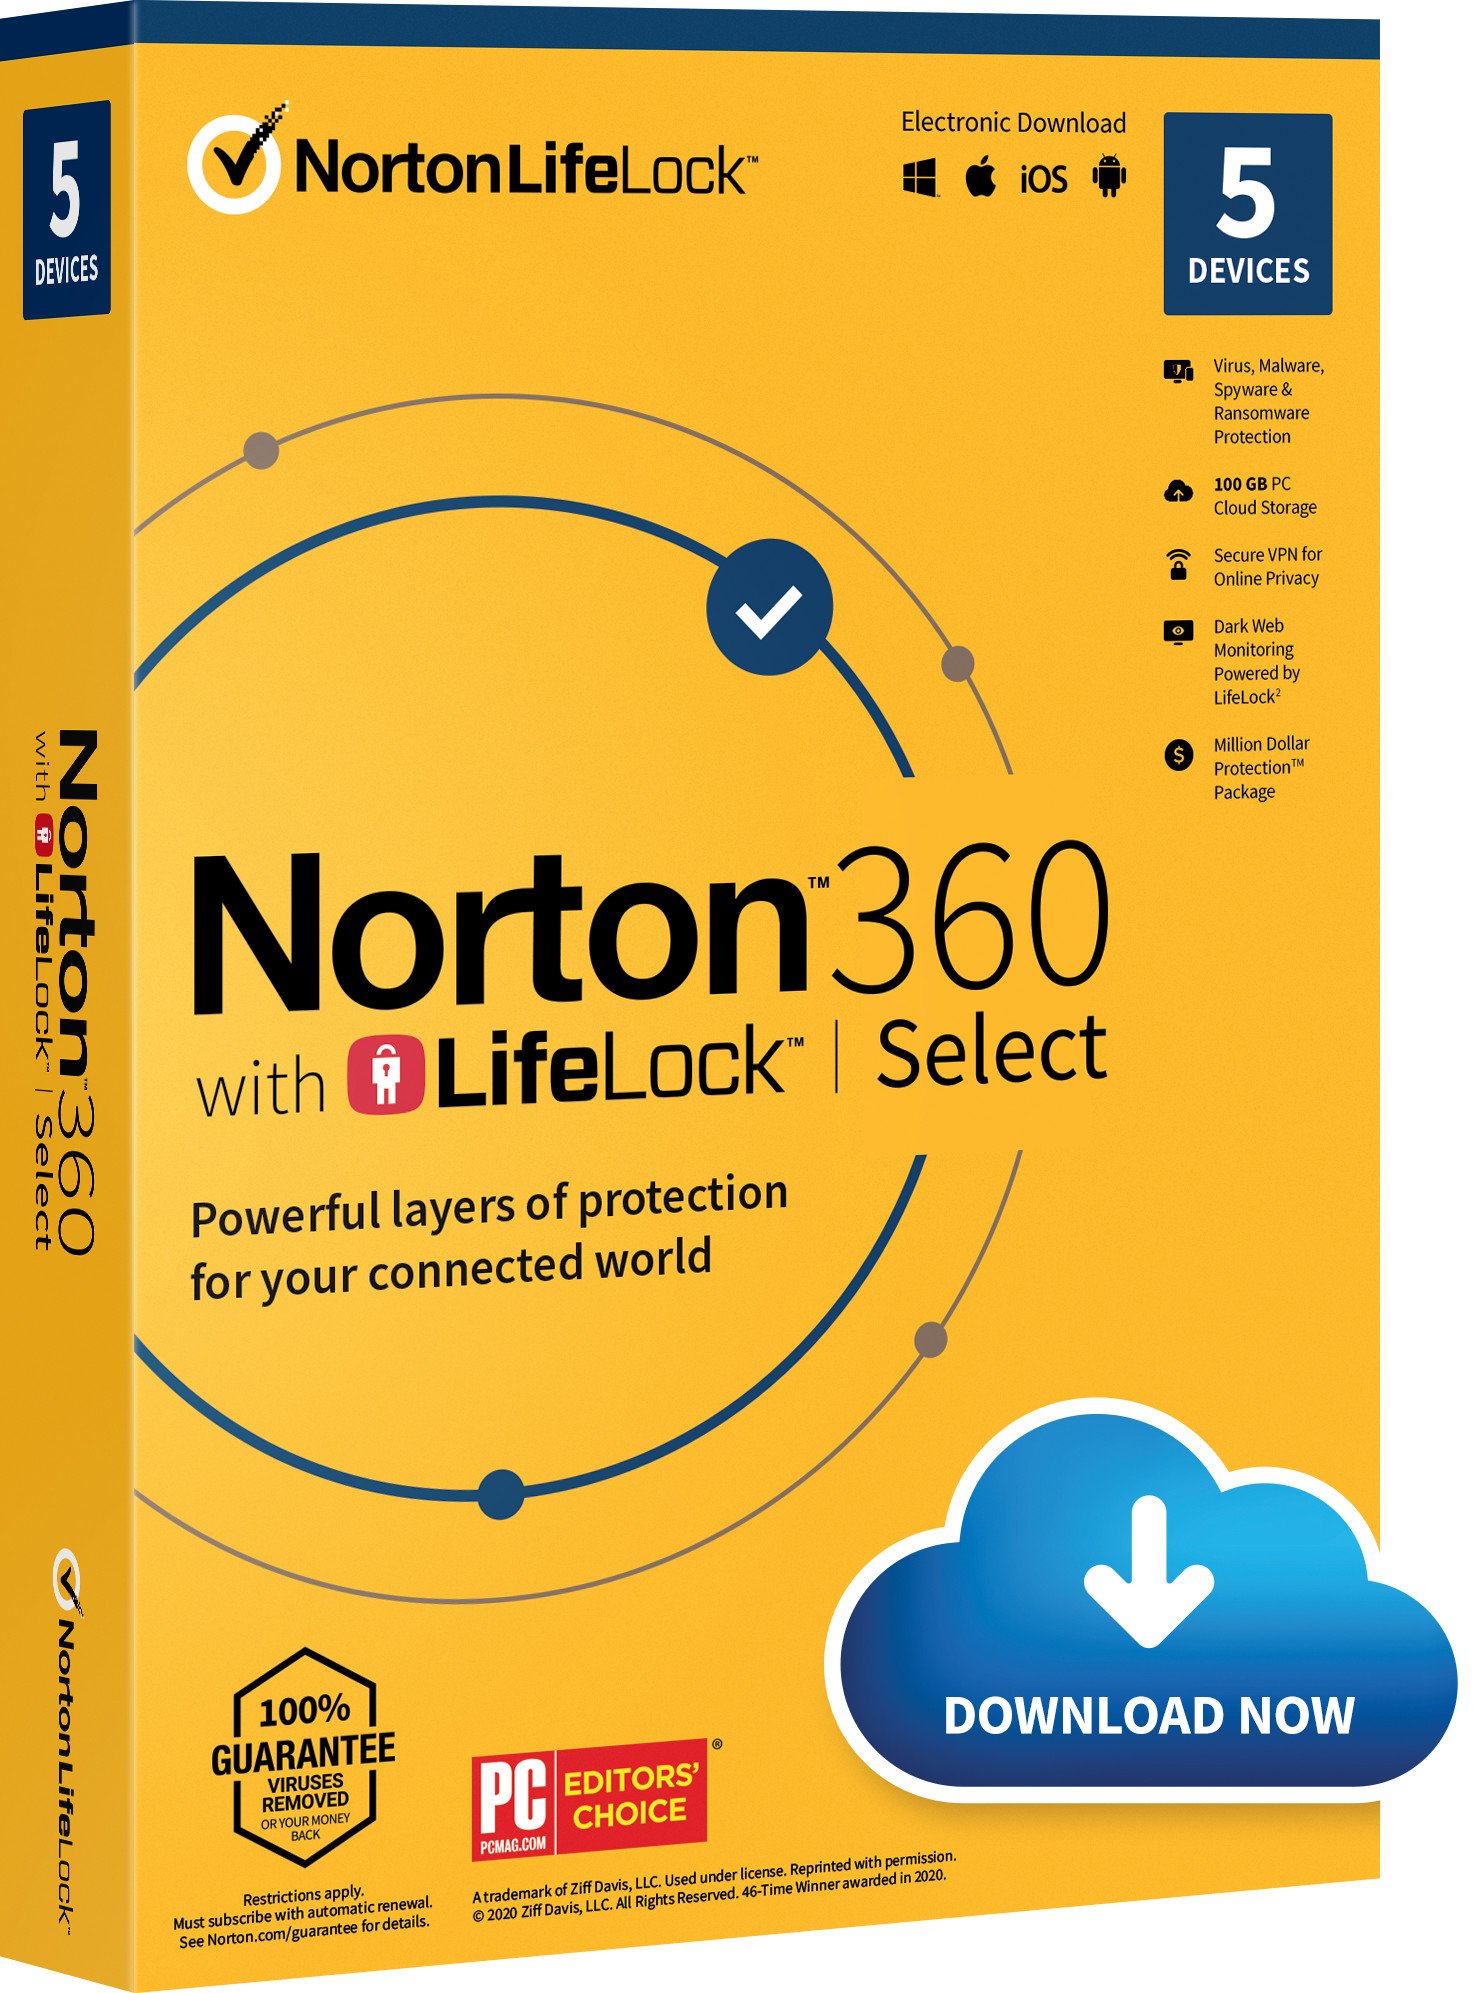 Norton 360 Lifelock Select